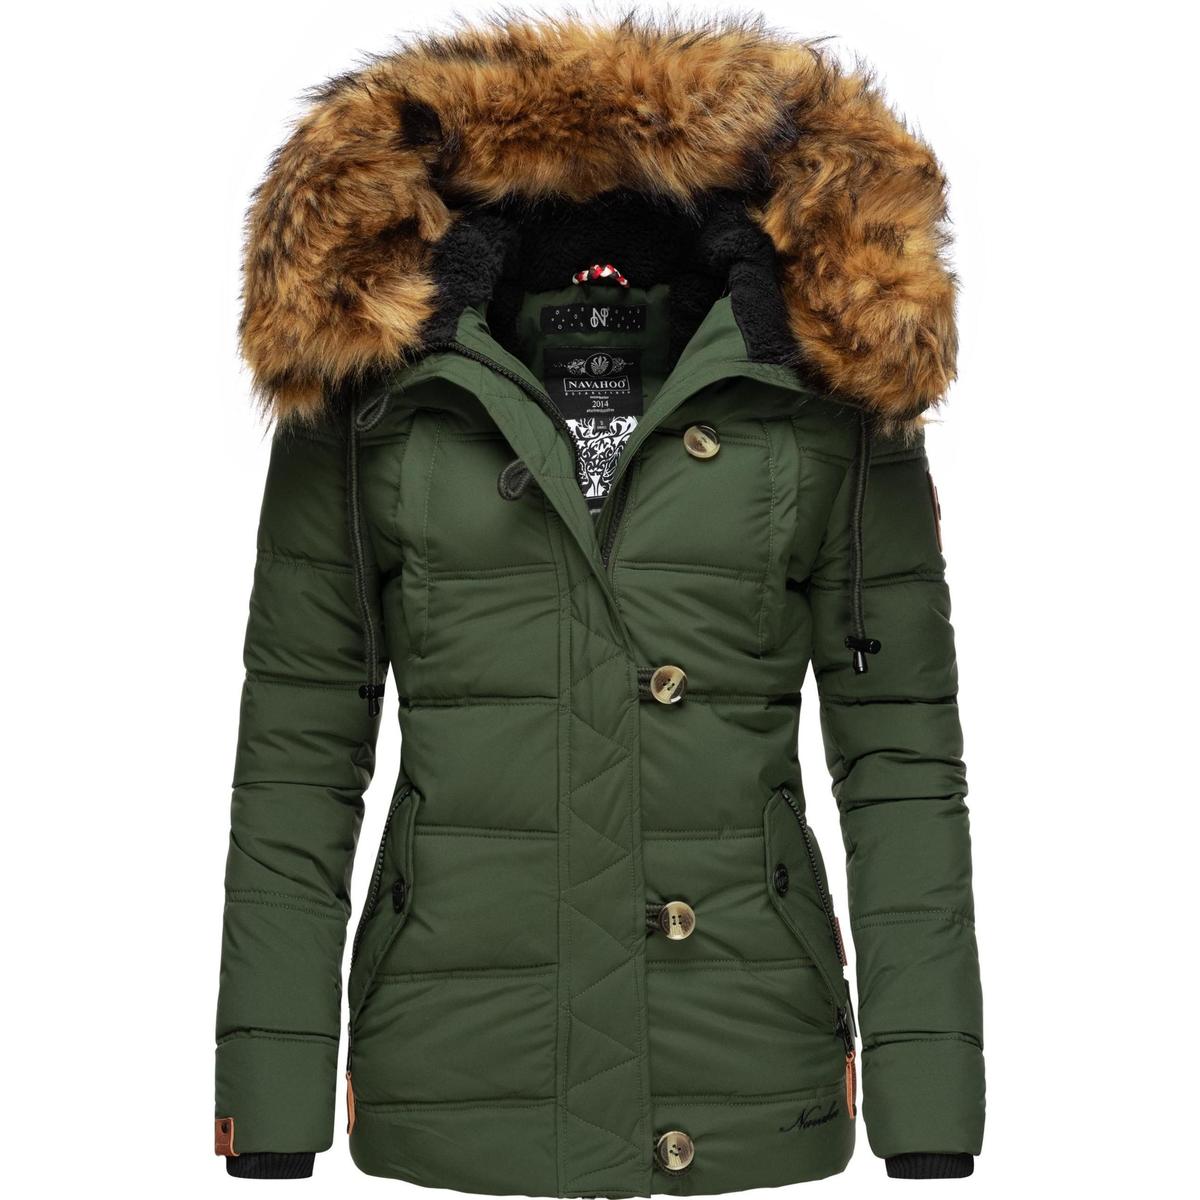 Damen Grün Navahoo Zoja 109,95 Kleidung - Jacken € Winterjacke